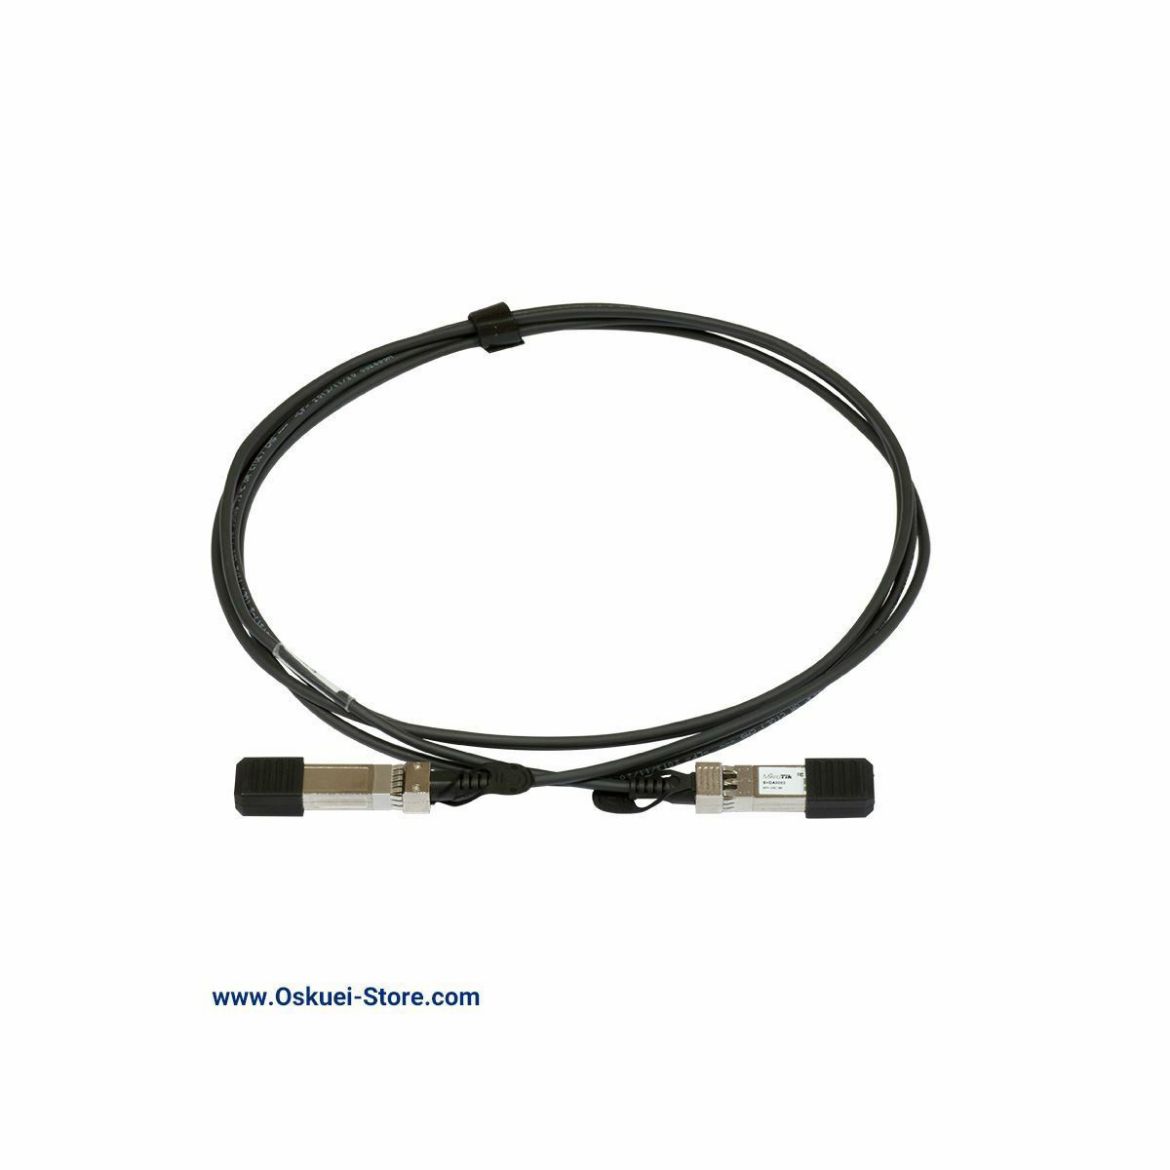 MikroTik S+DA0003 SFP Cable